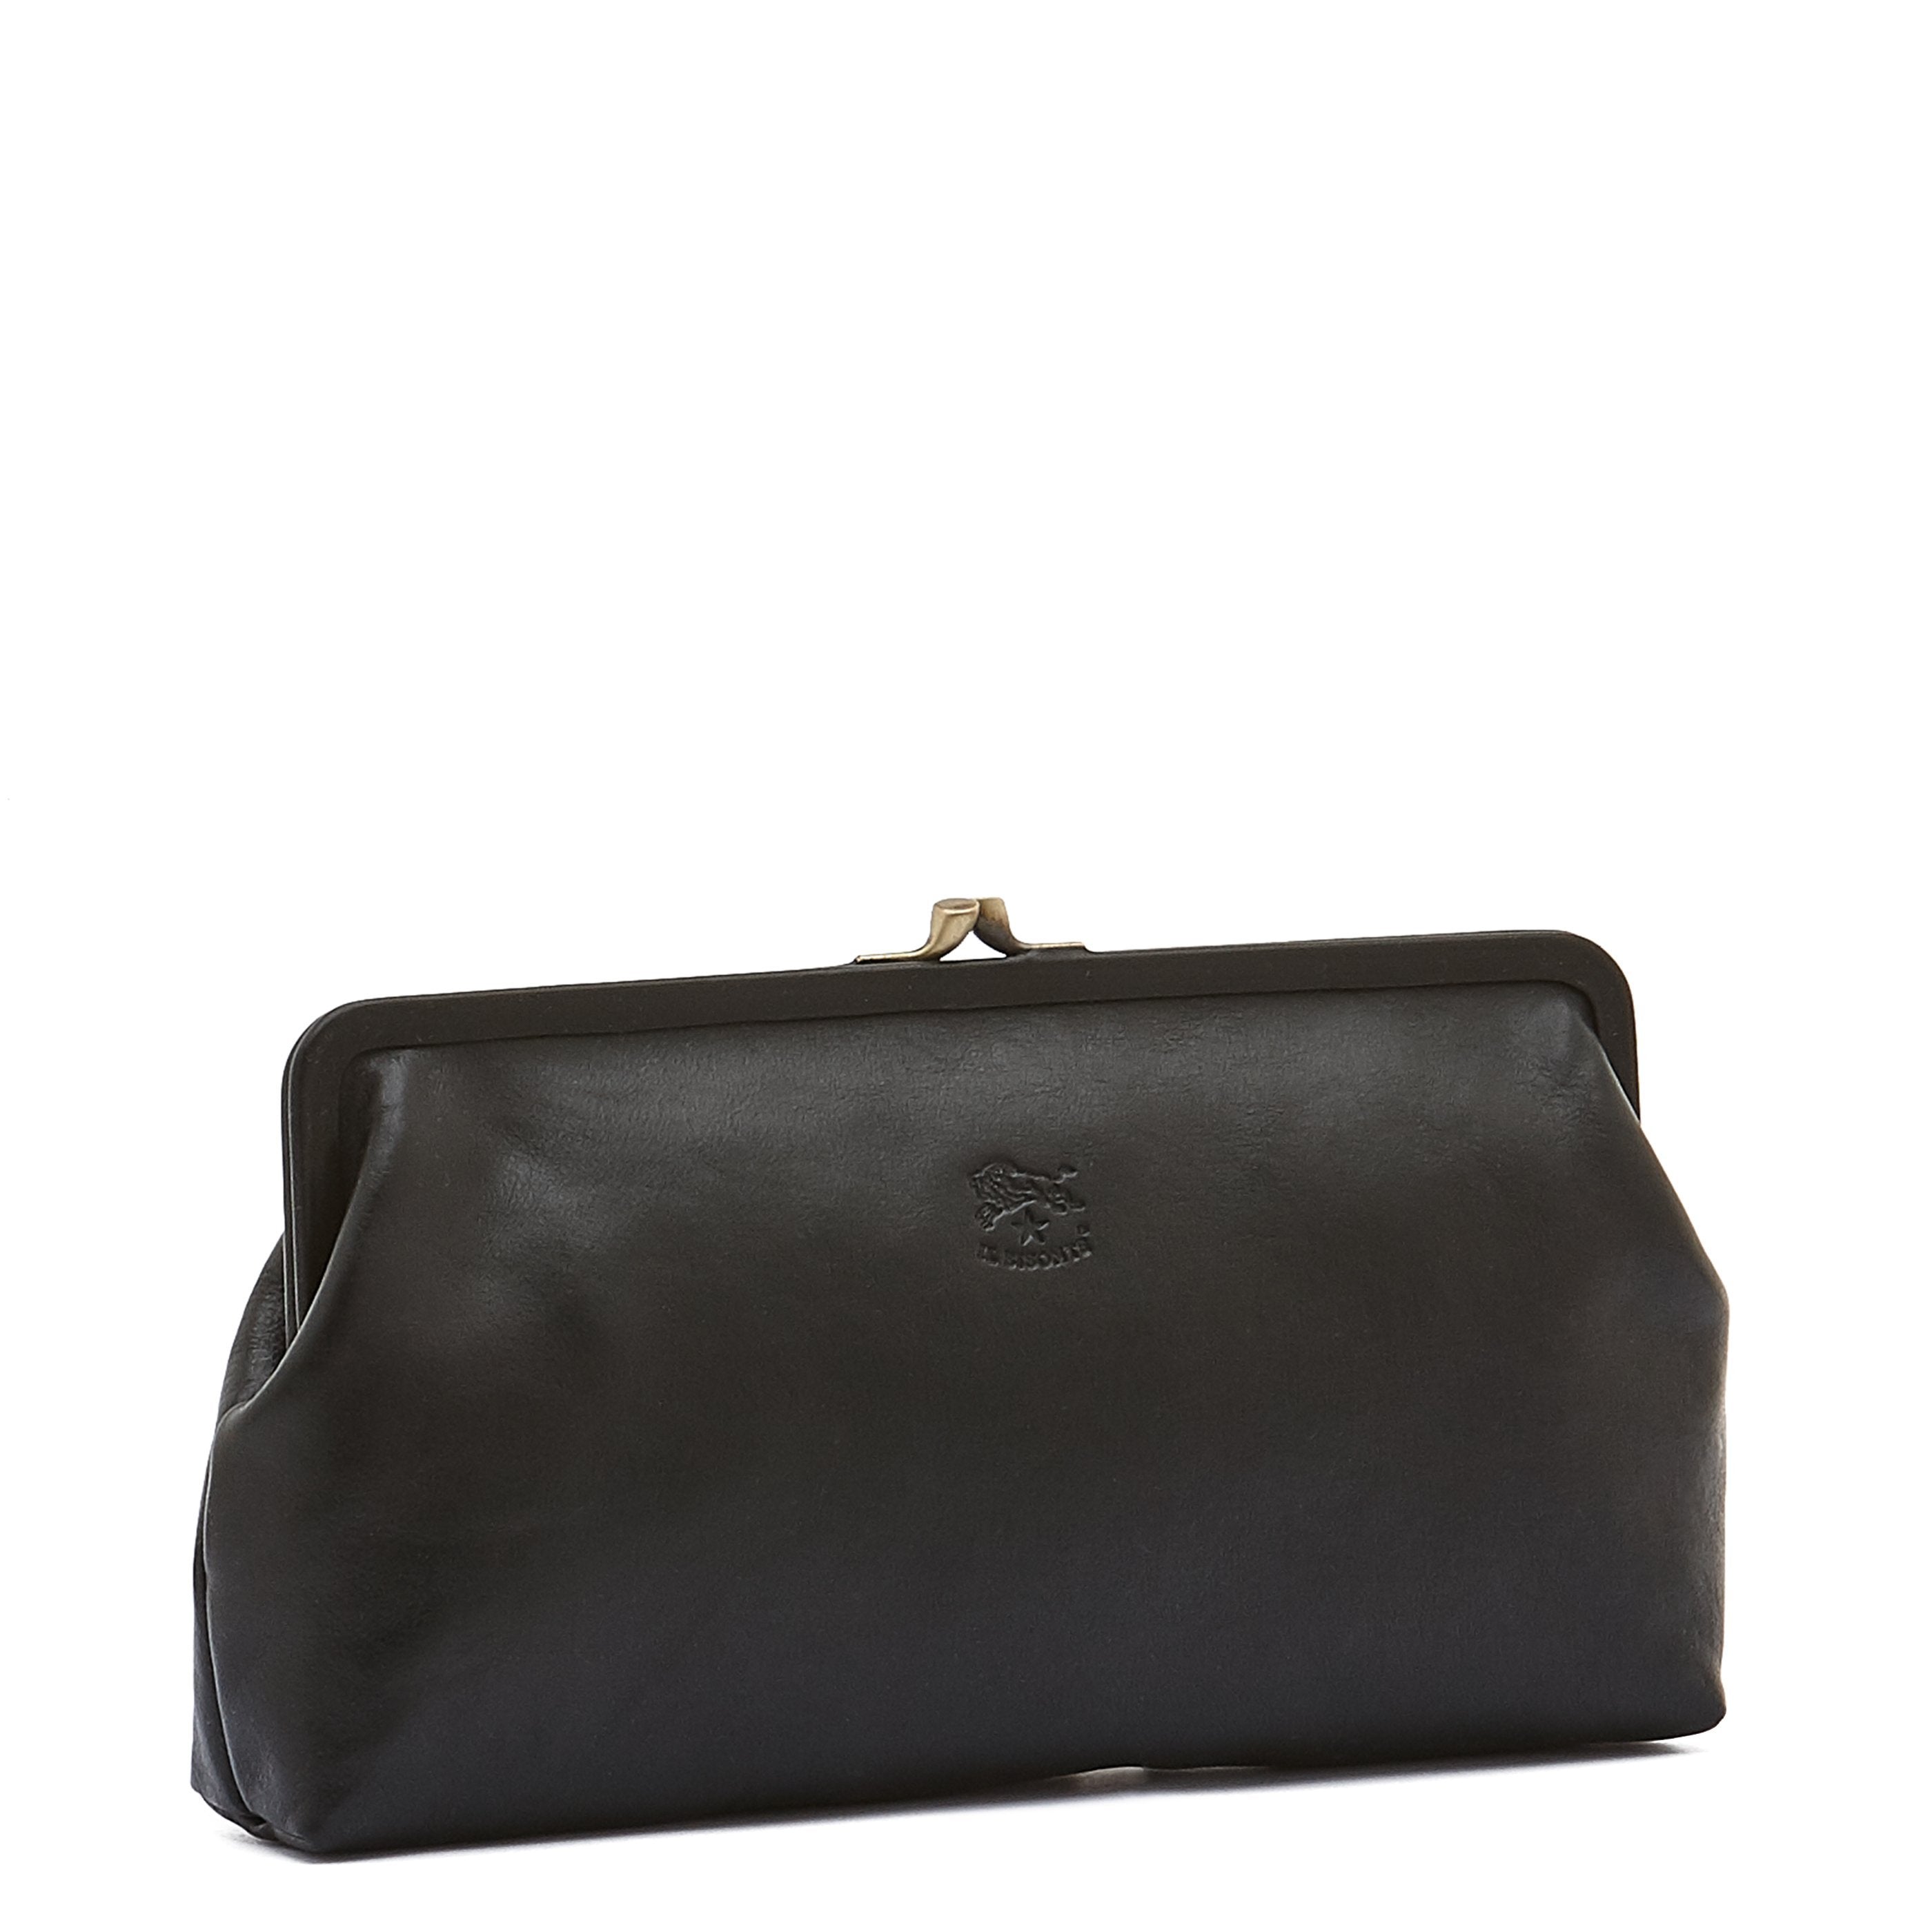 Manuela | Women's clutch bag in calf leather color black